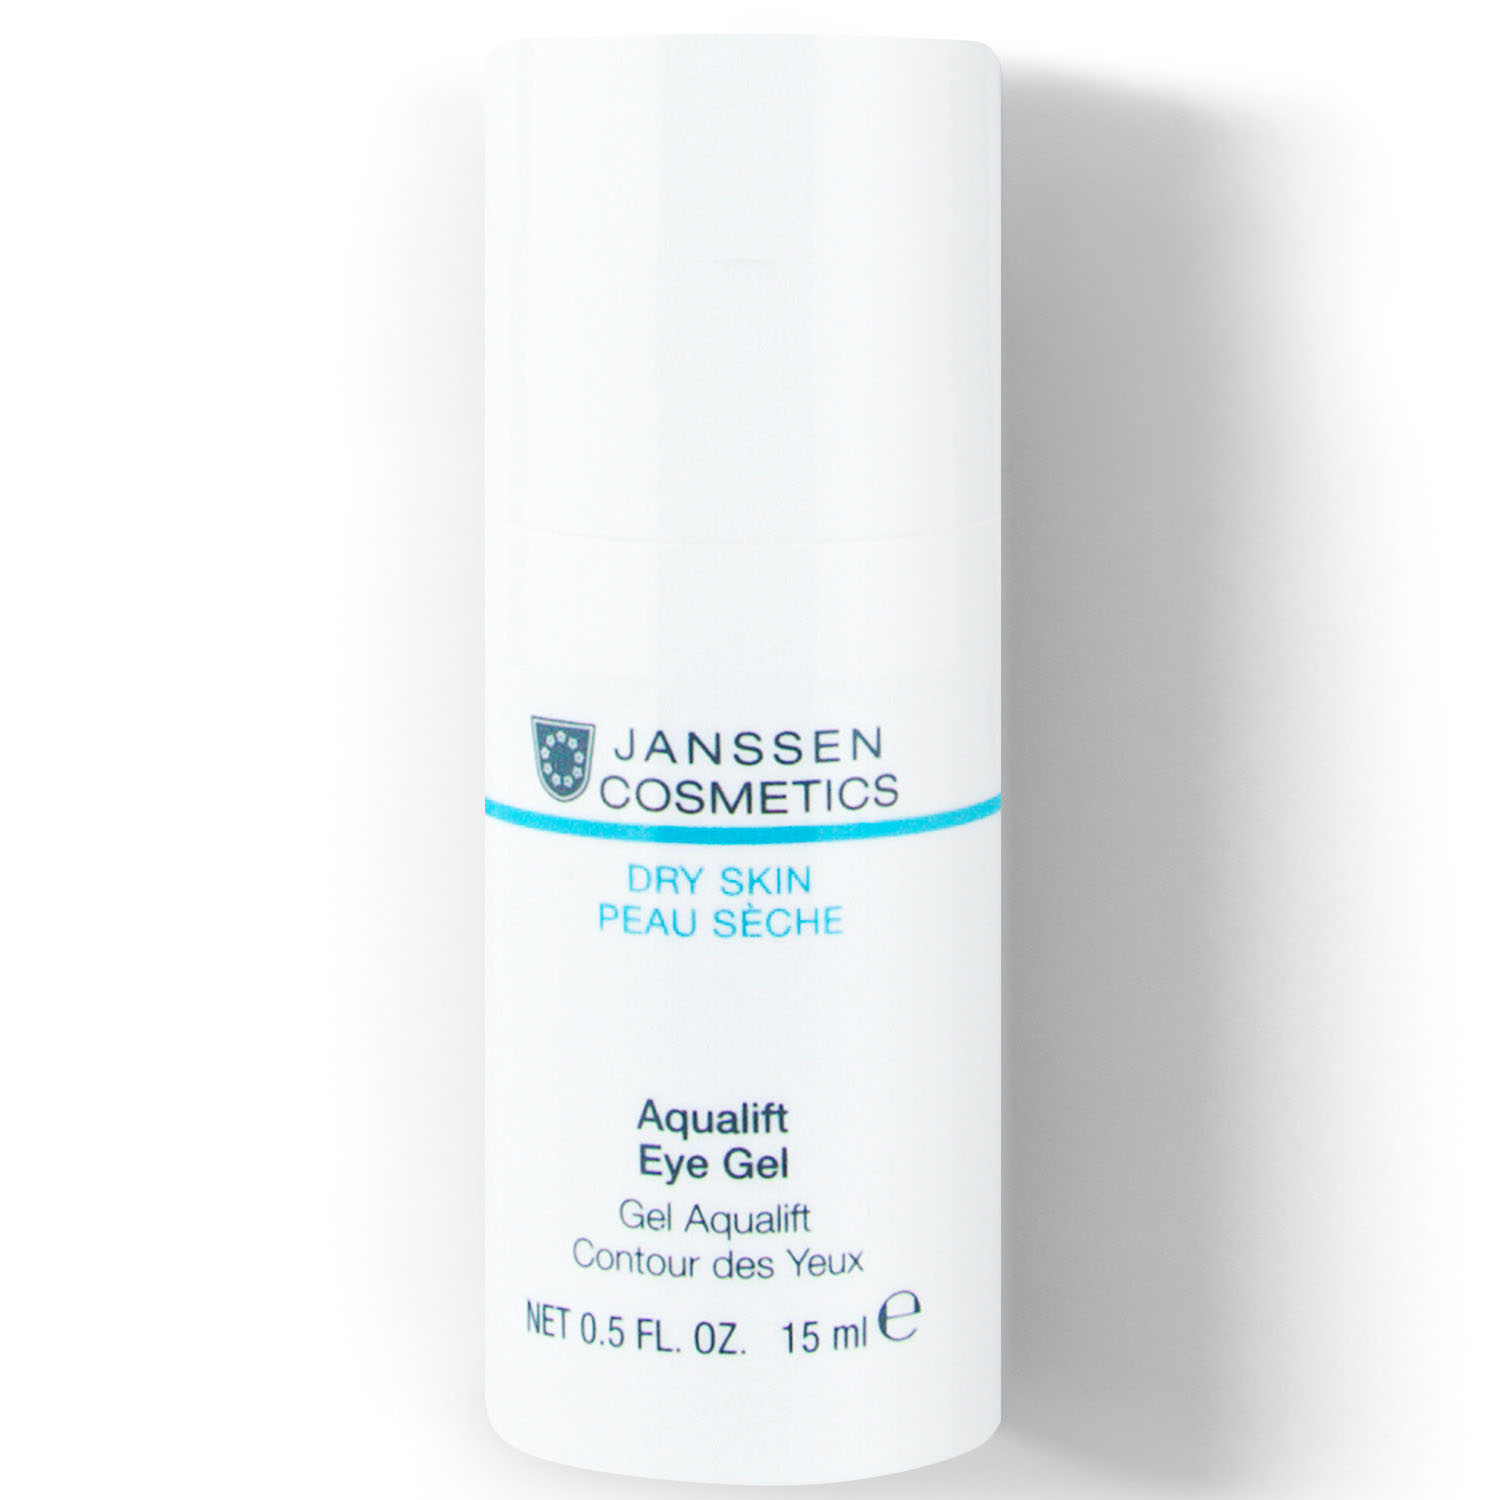 цена Janssen Cosmetics Ультраувлажняющий лифтинг-гель для контура глаз Aqualift Eye Gel, 15 мл (Janssen Cosmetics, Dry Skin)